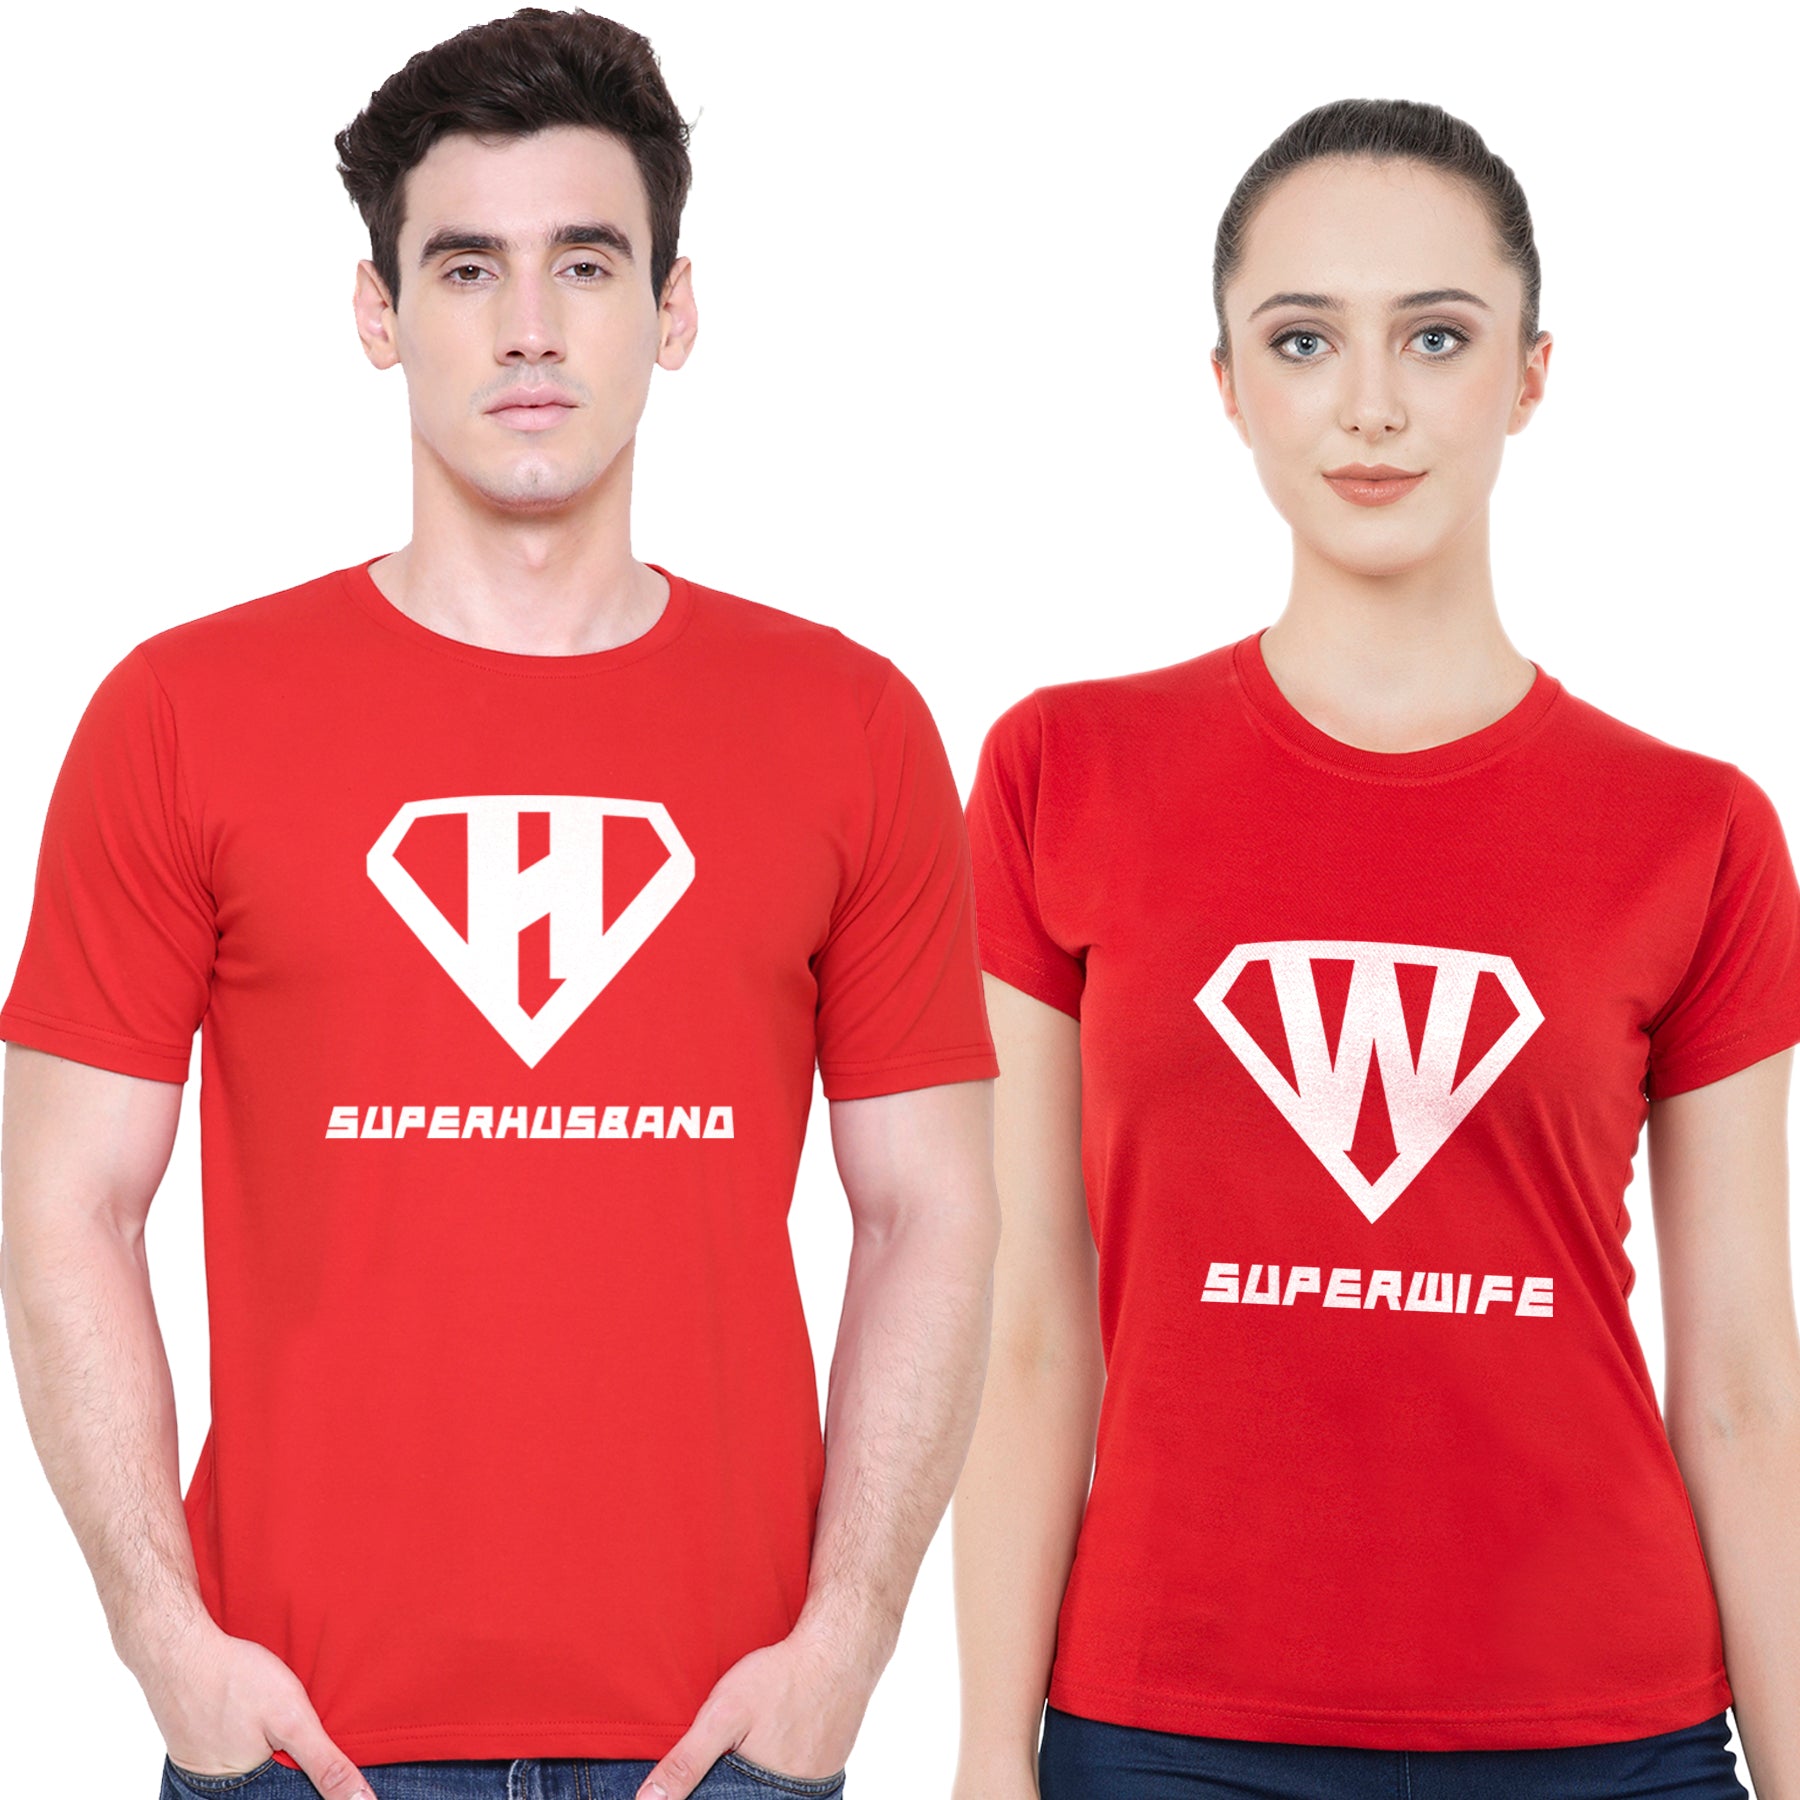 Super Husband & Wifematching Couple T shirts- Red